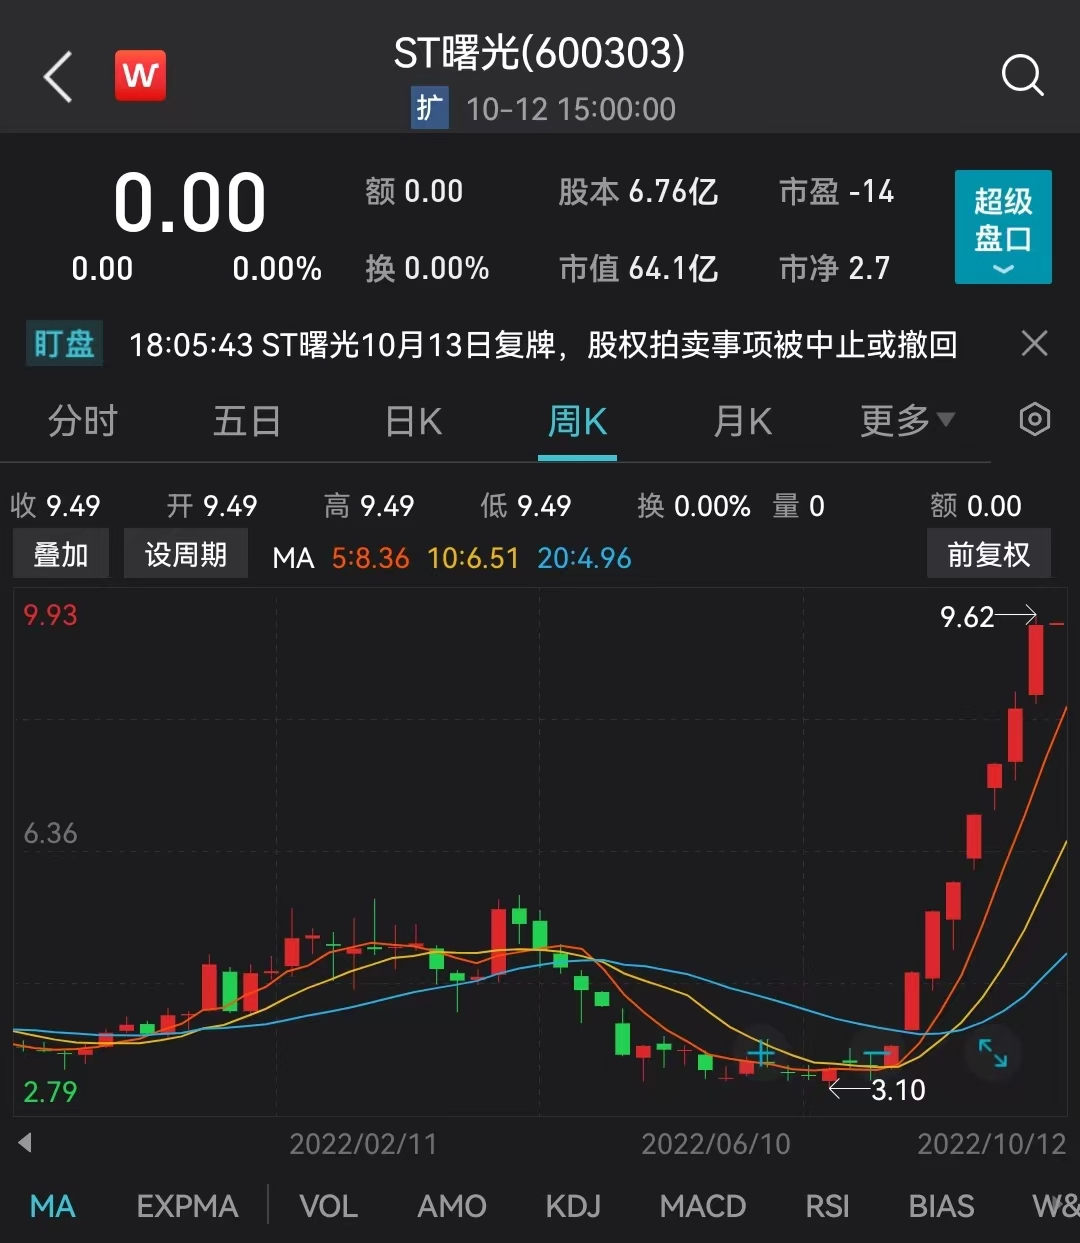 ST曙光股价累计涨幅超过200% 澄清相关市场传闻